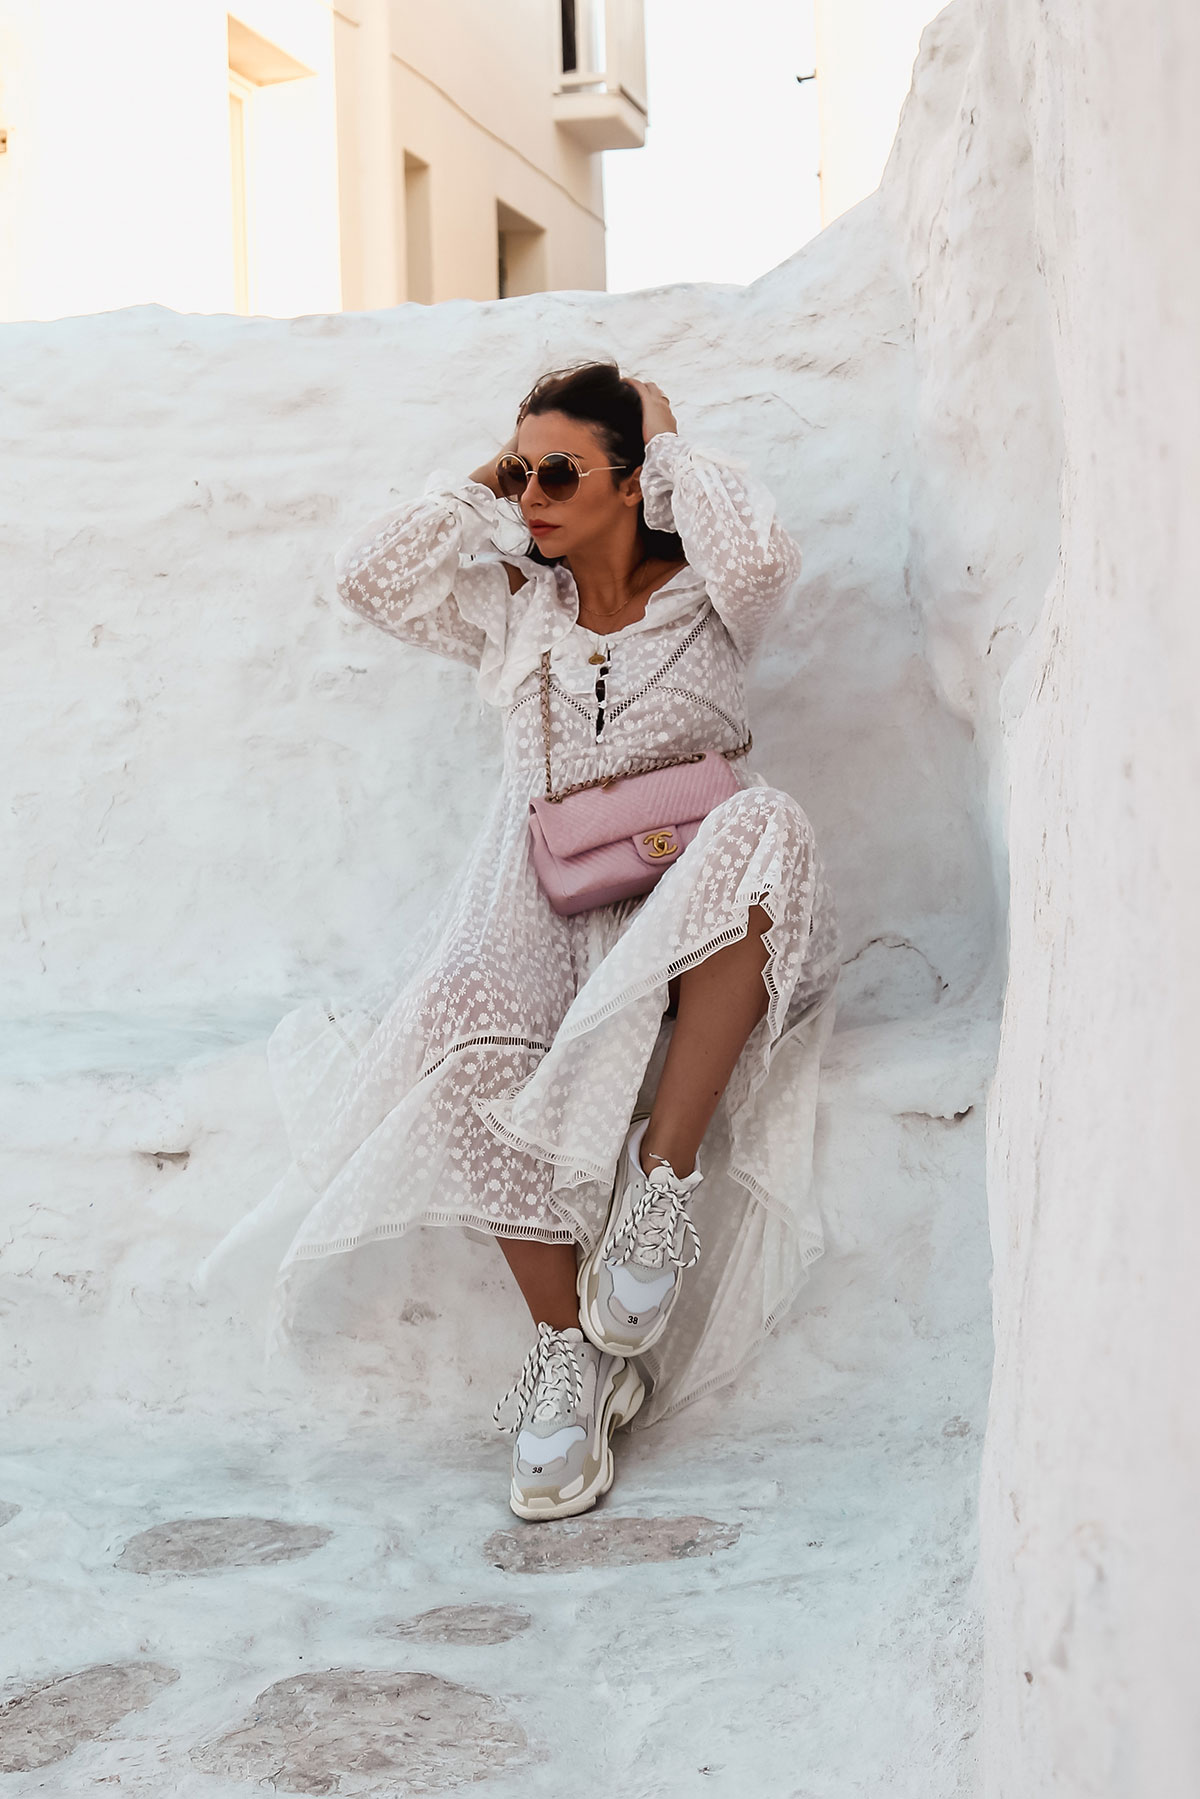 Self-Portrait Dress in Mykonos worn by Stella Asteria - Fashion & Lifestyle Blogger - worn with pink Chanel bag, Balenciaga Triple S and Chloe sunglasses